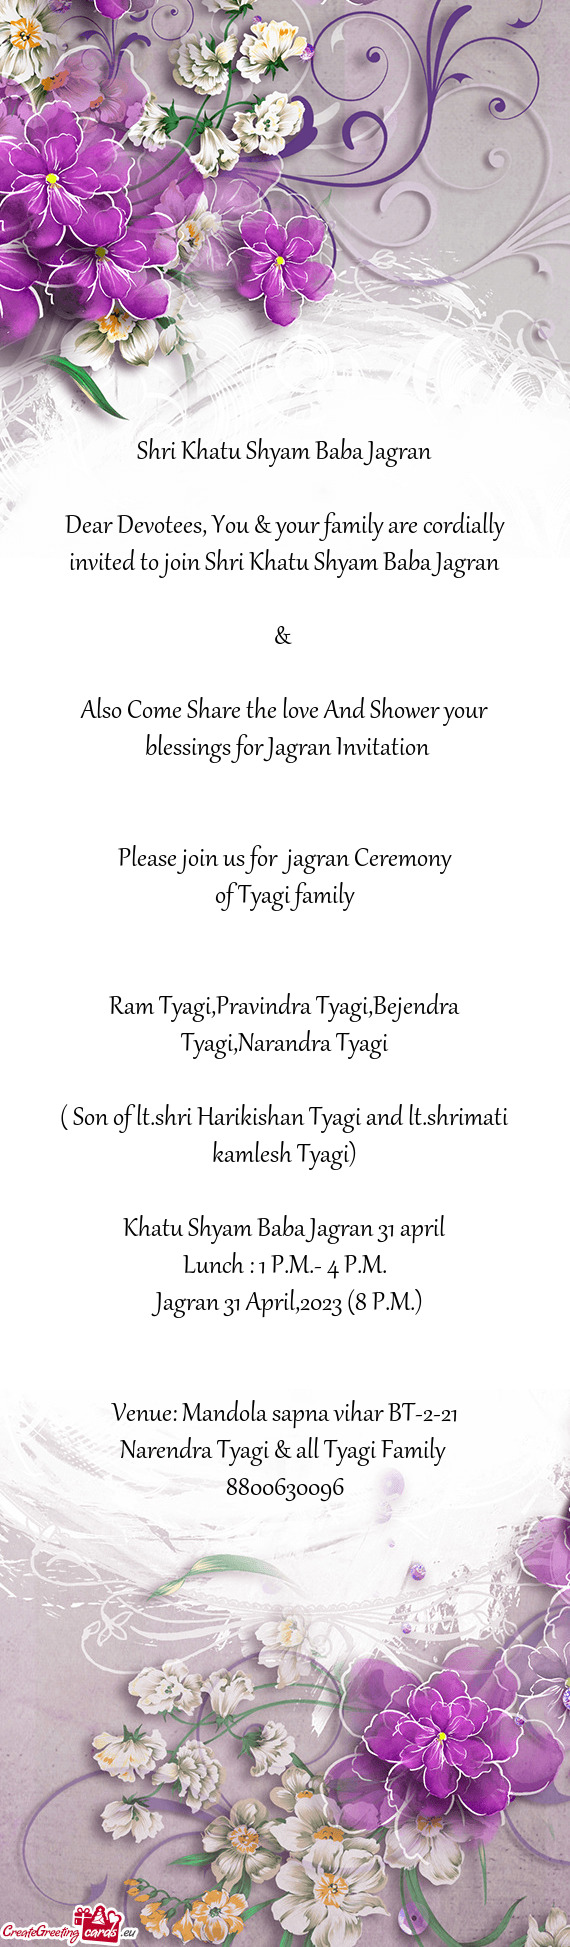 Blessings for Jagran Invitation